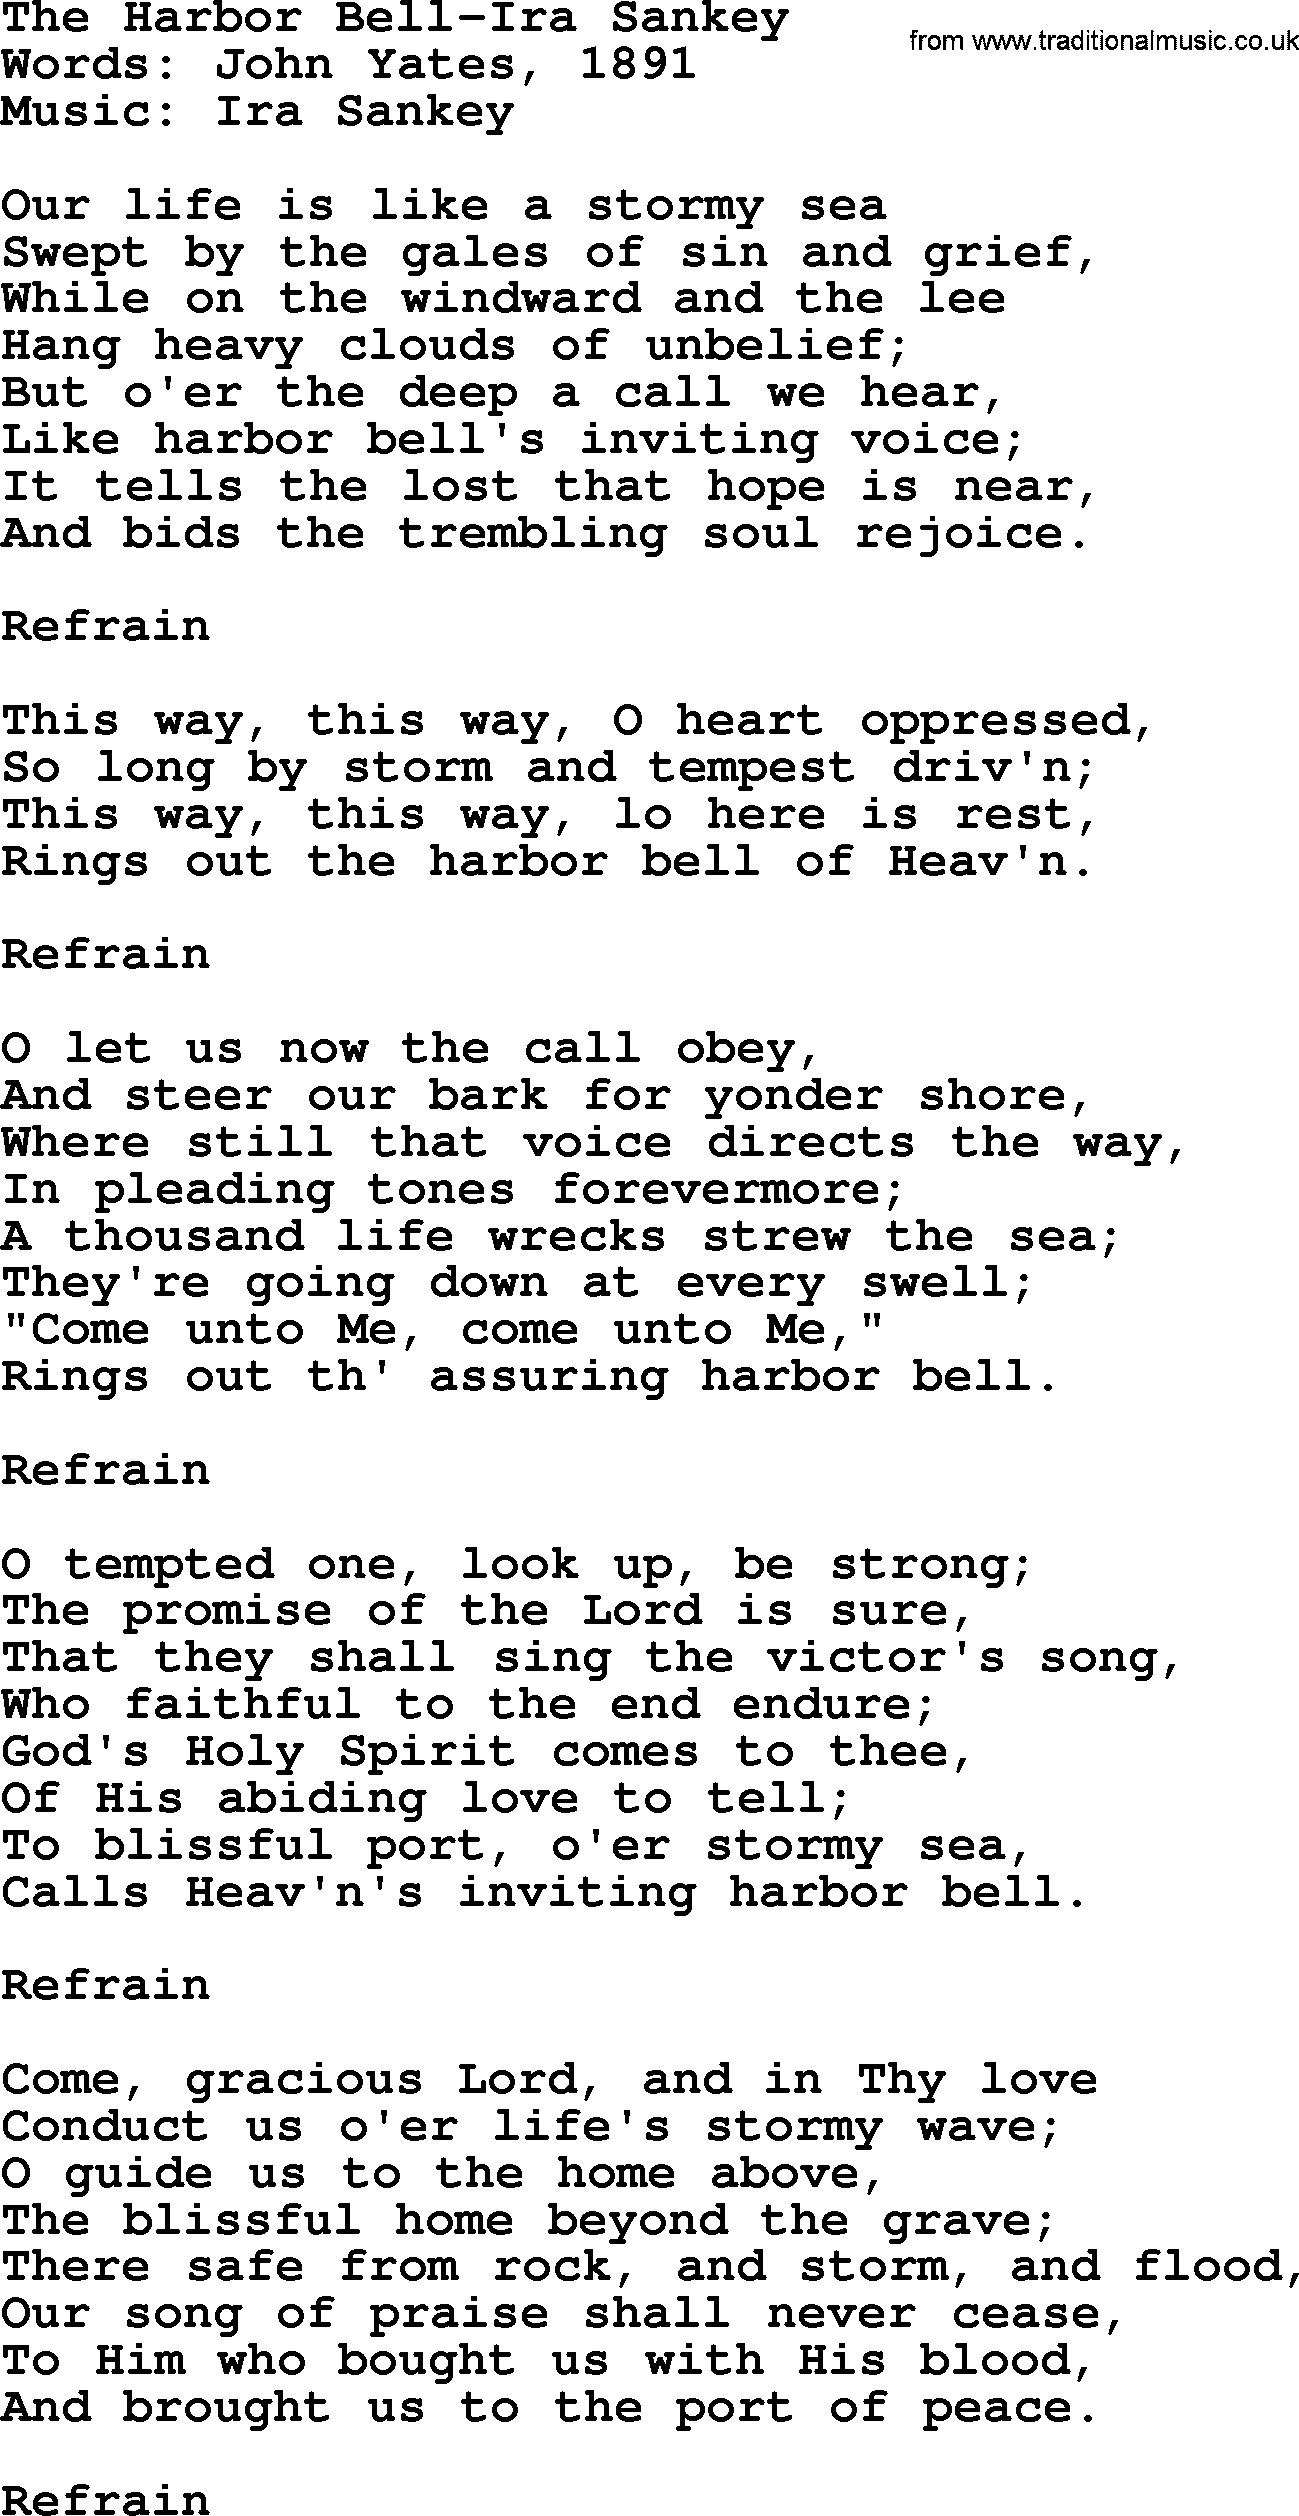 Ira Sankey hymn: The Harbor Bell-Ira Sankey, lyrics